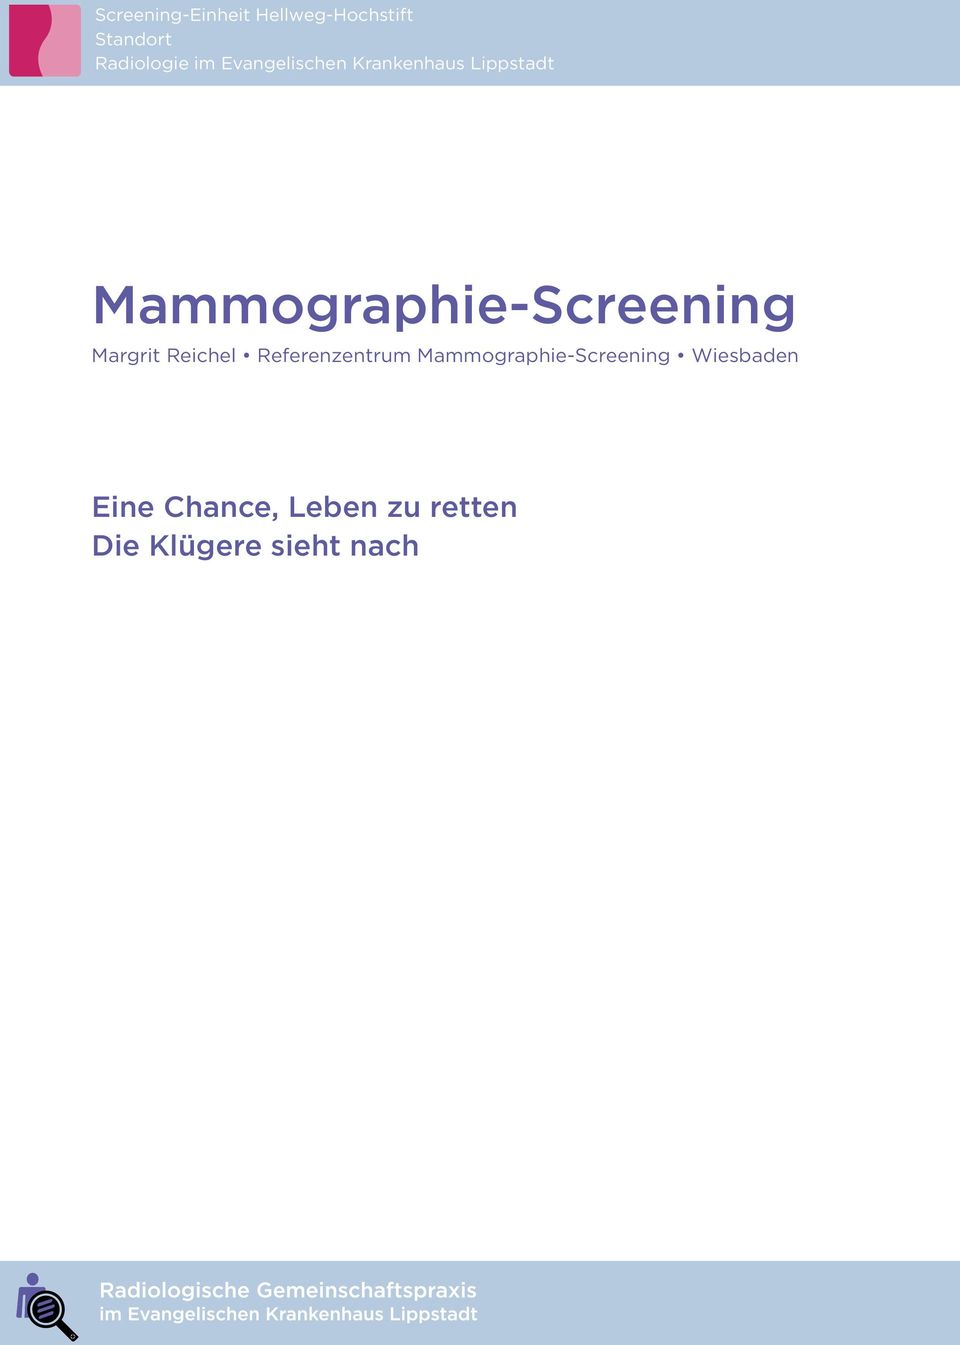 Mammographie-Screening Wiesbaden